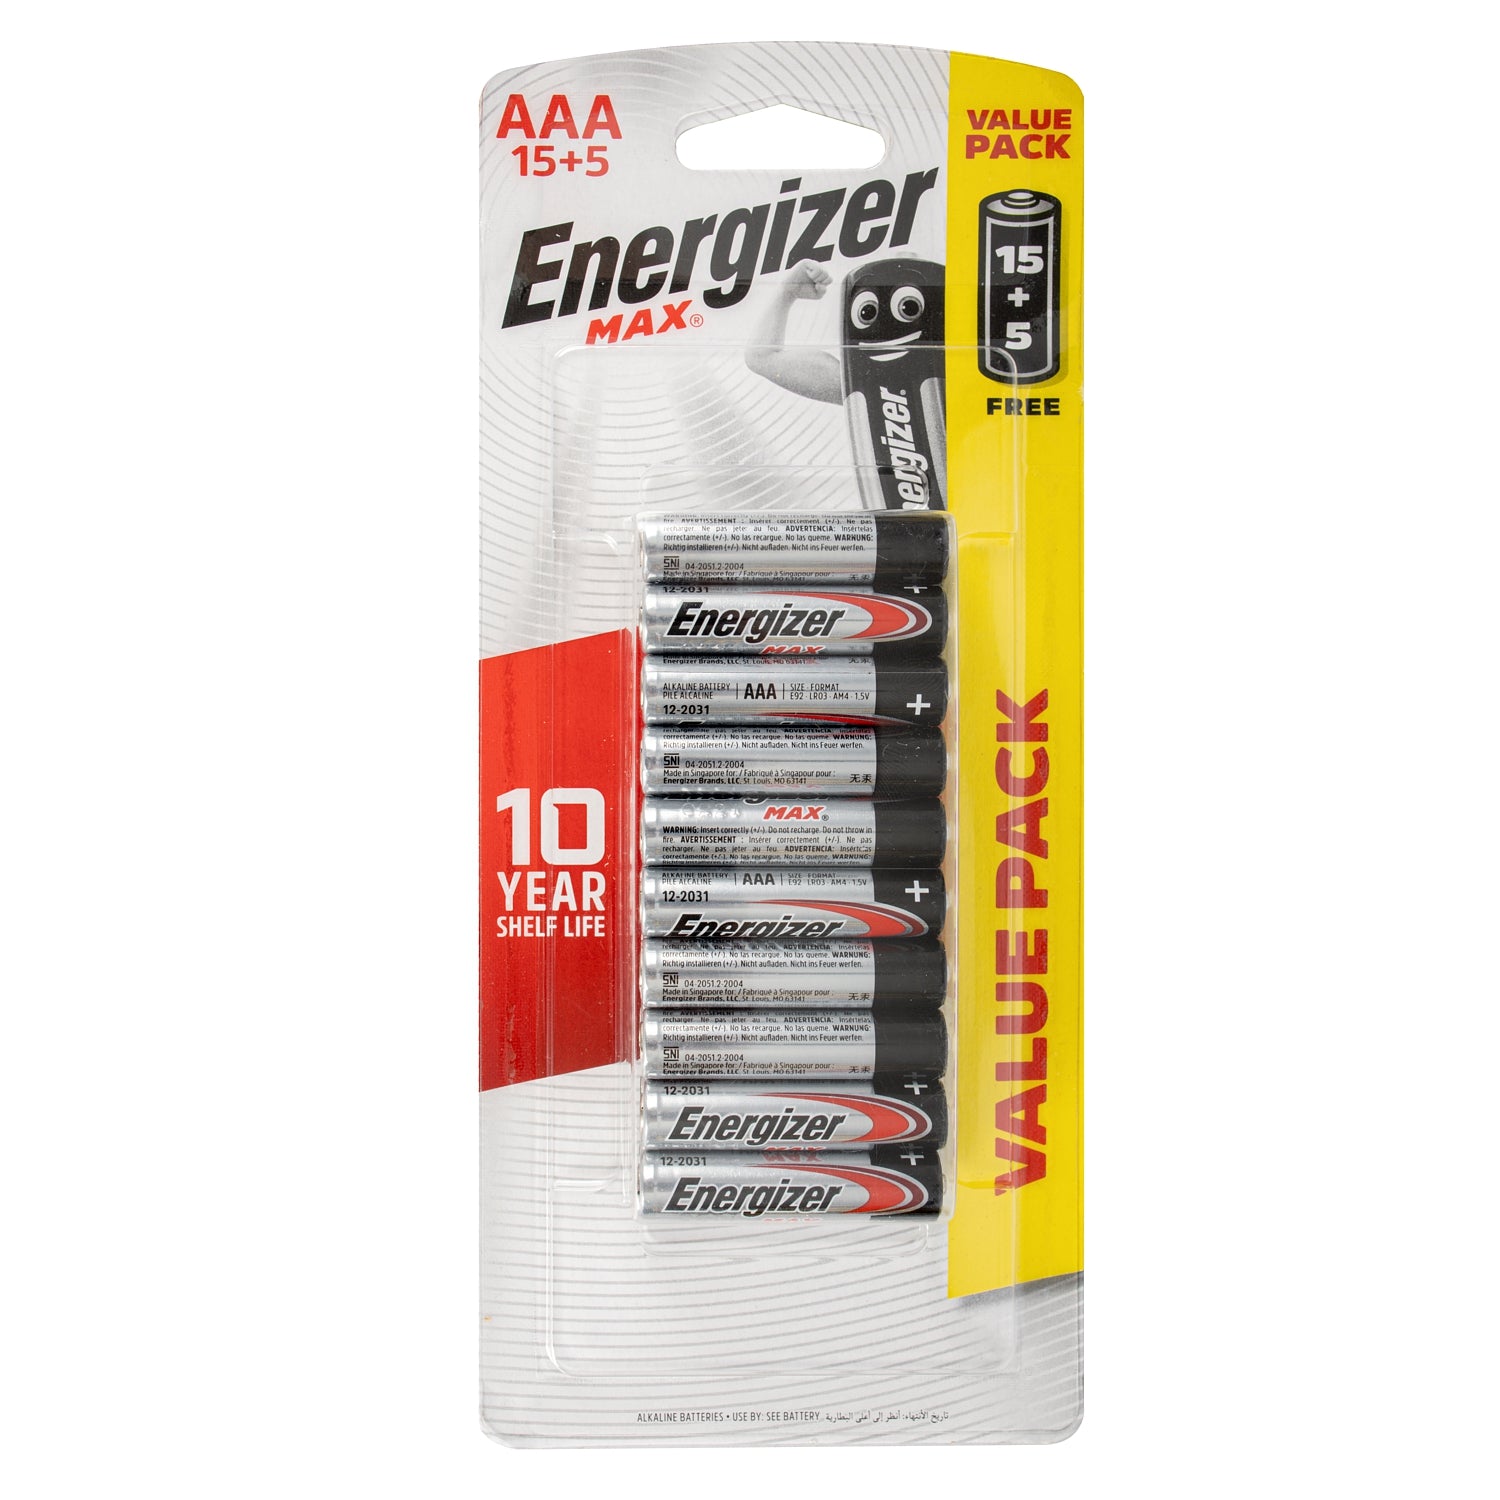 energizer-max:-aaa---15+5-free-pack-(moq-12)-e301611900-1